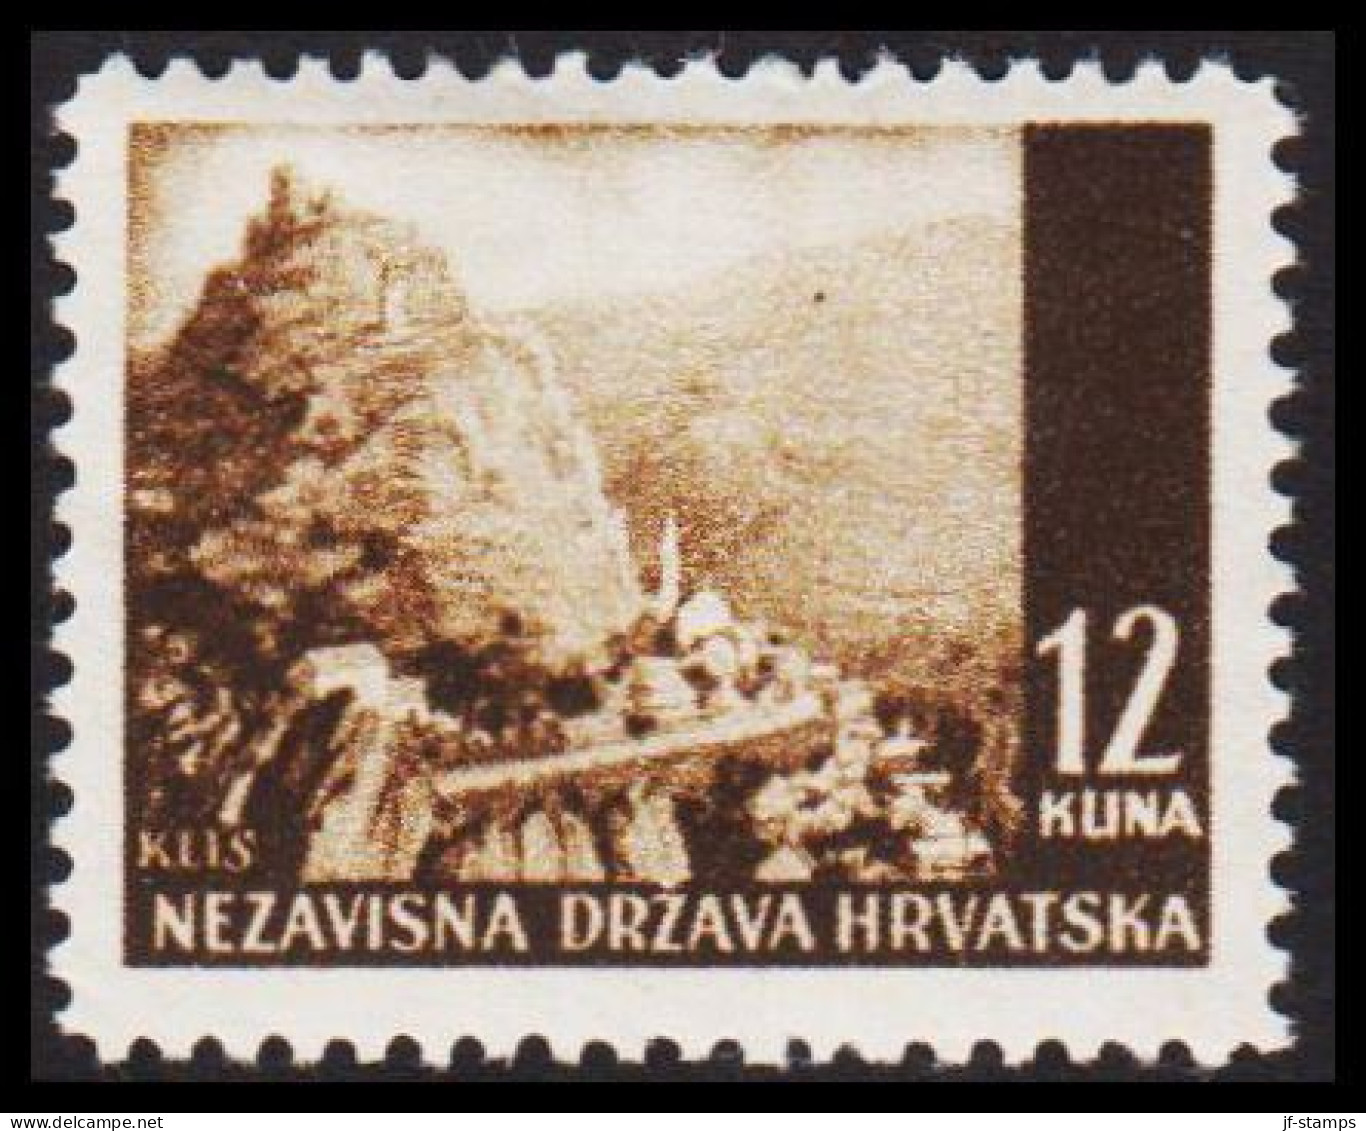 1941-1942. HRVATSKA Landscapes 12 KUNA. Hinged. (Michel 61) - JF546055 - Croatia